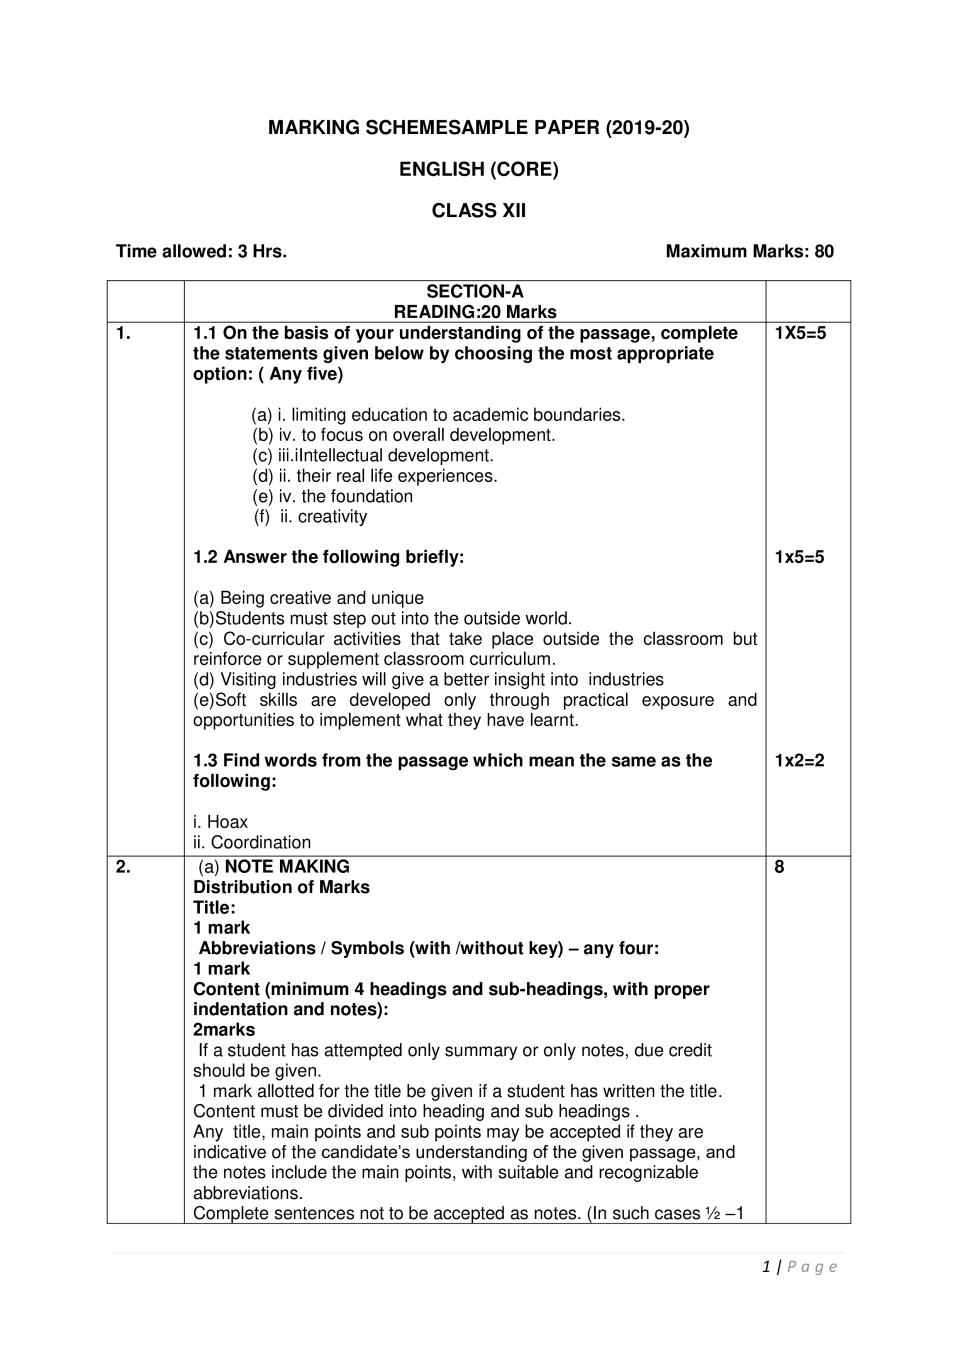 cbse-class-12-marking-scheme-2020-for-english-core